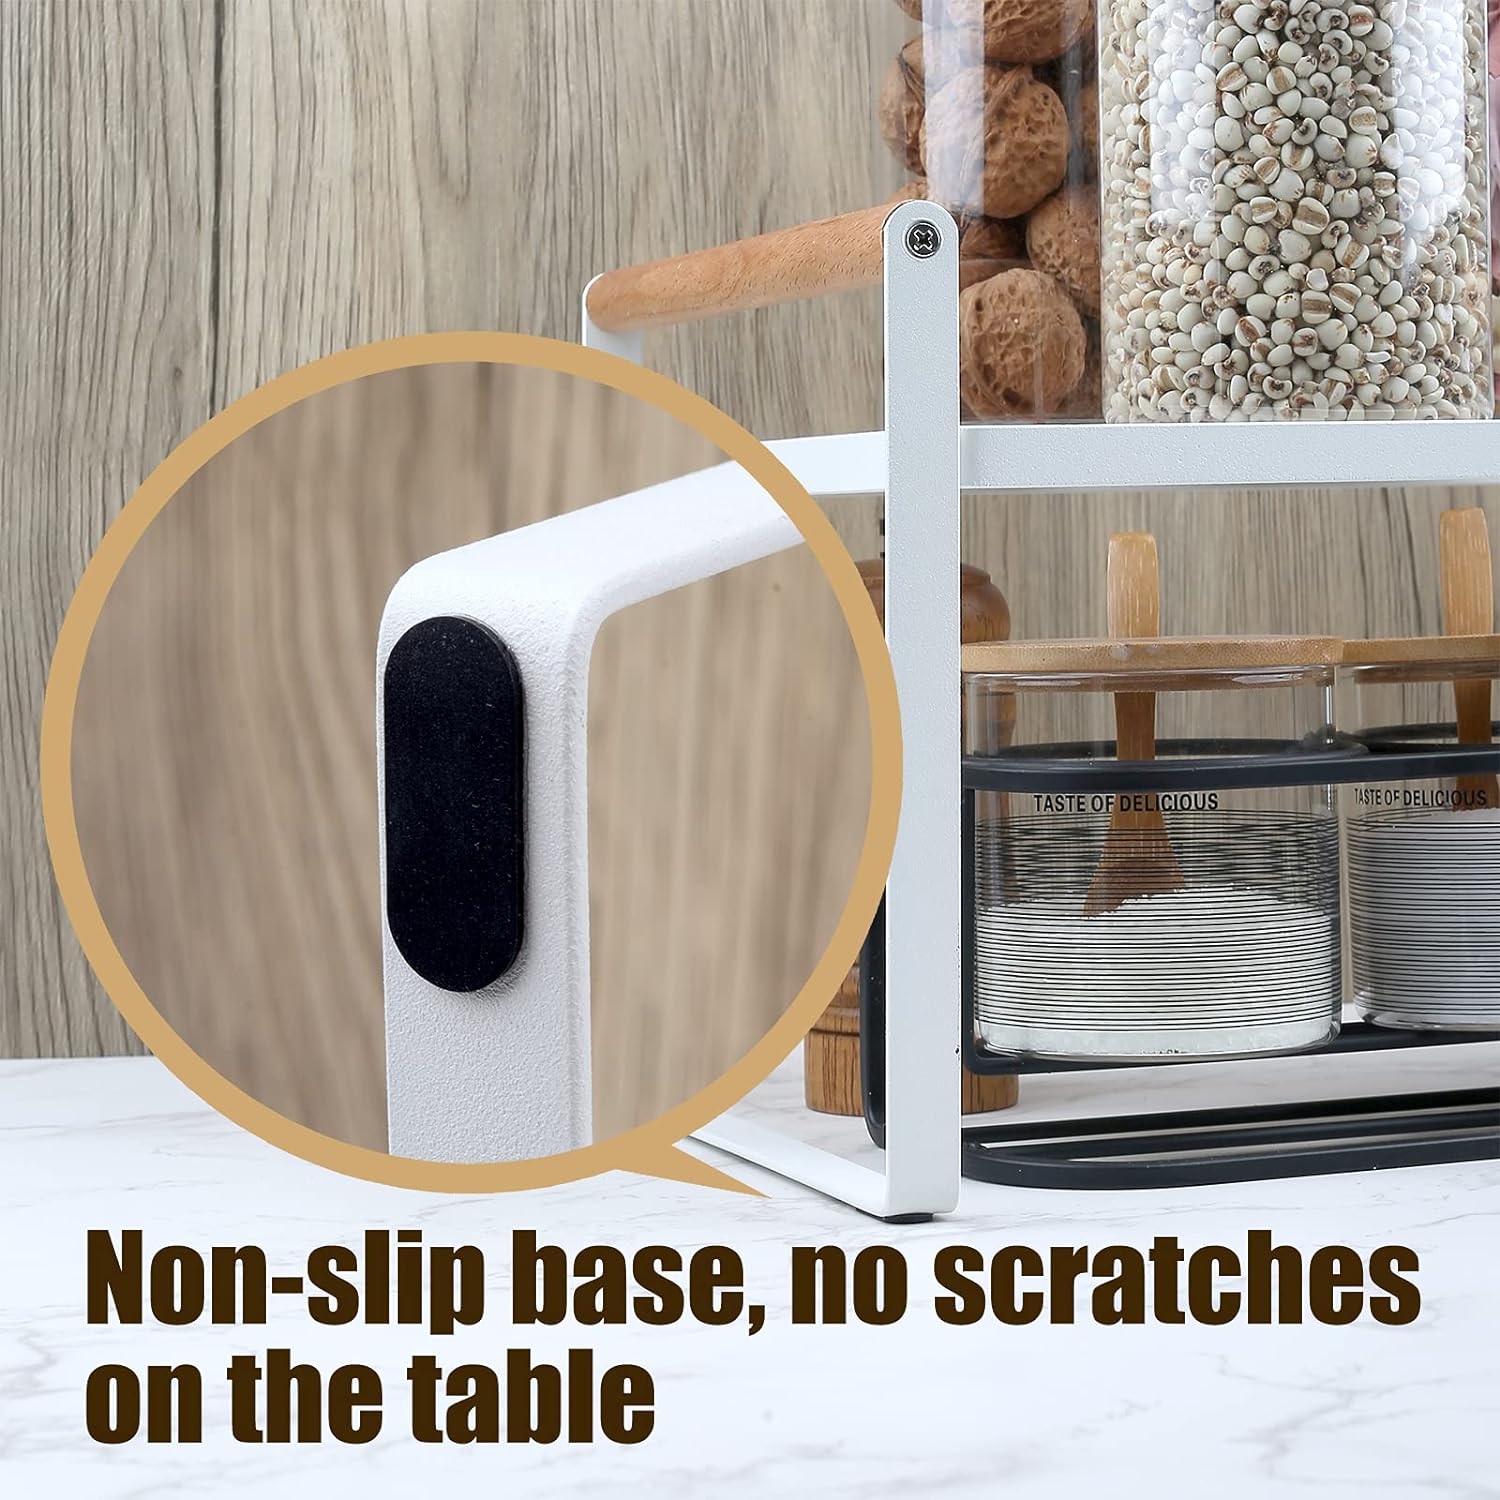 Countertop Table Riser Size- S (White)